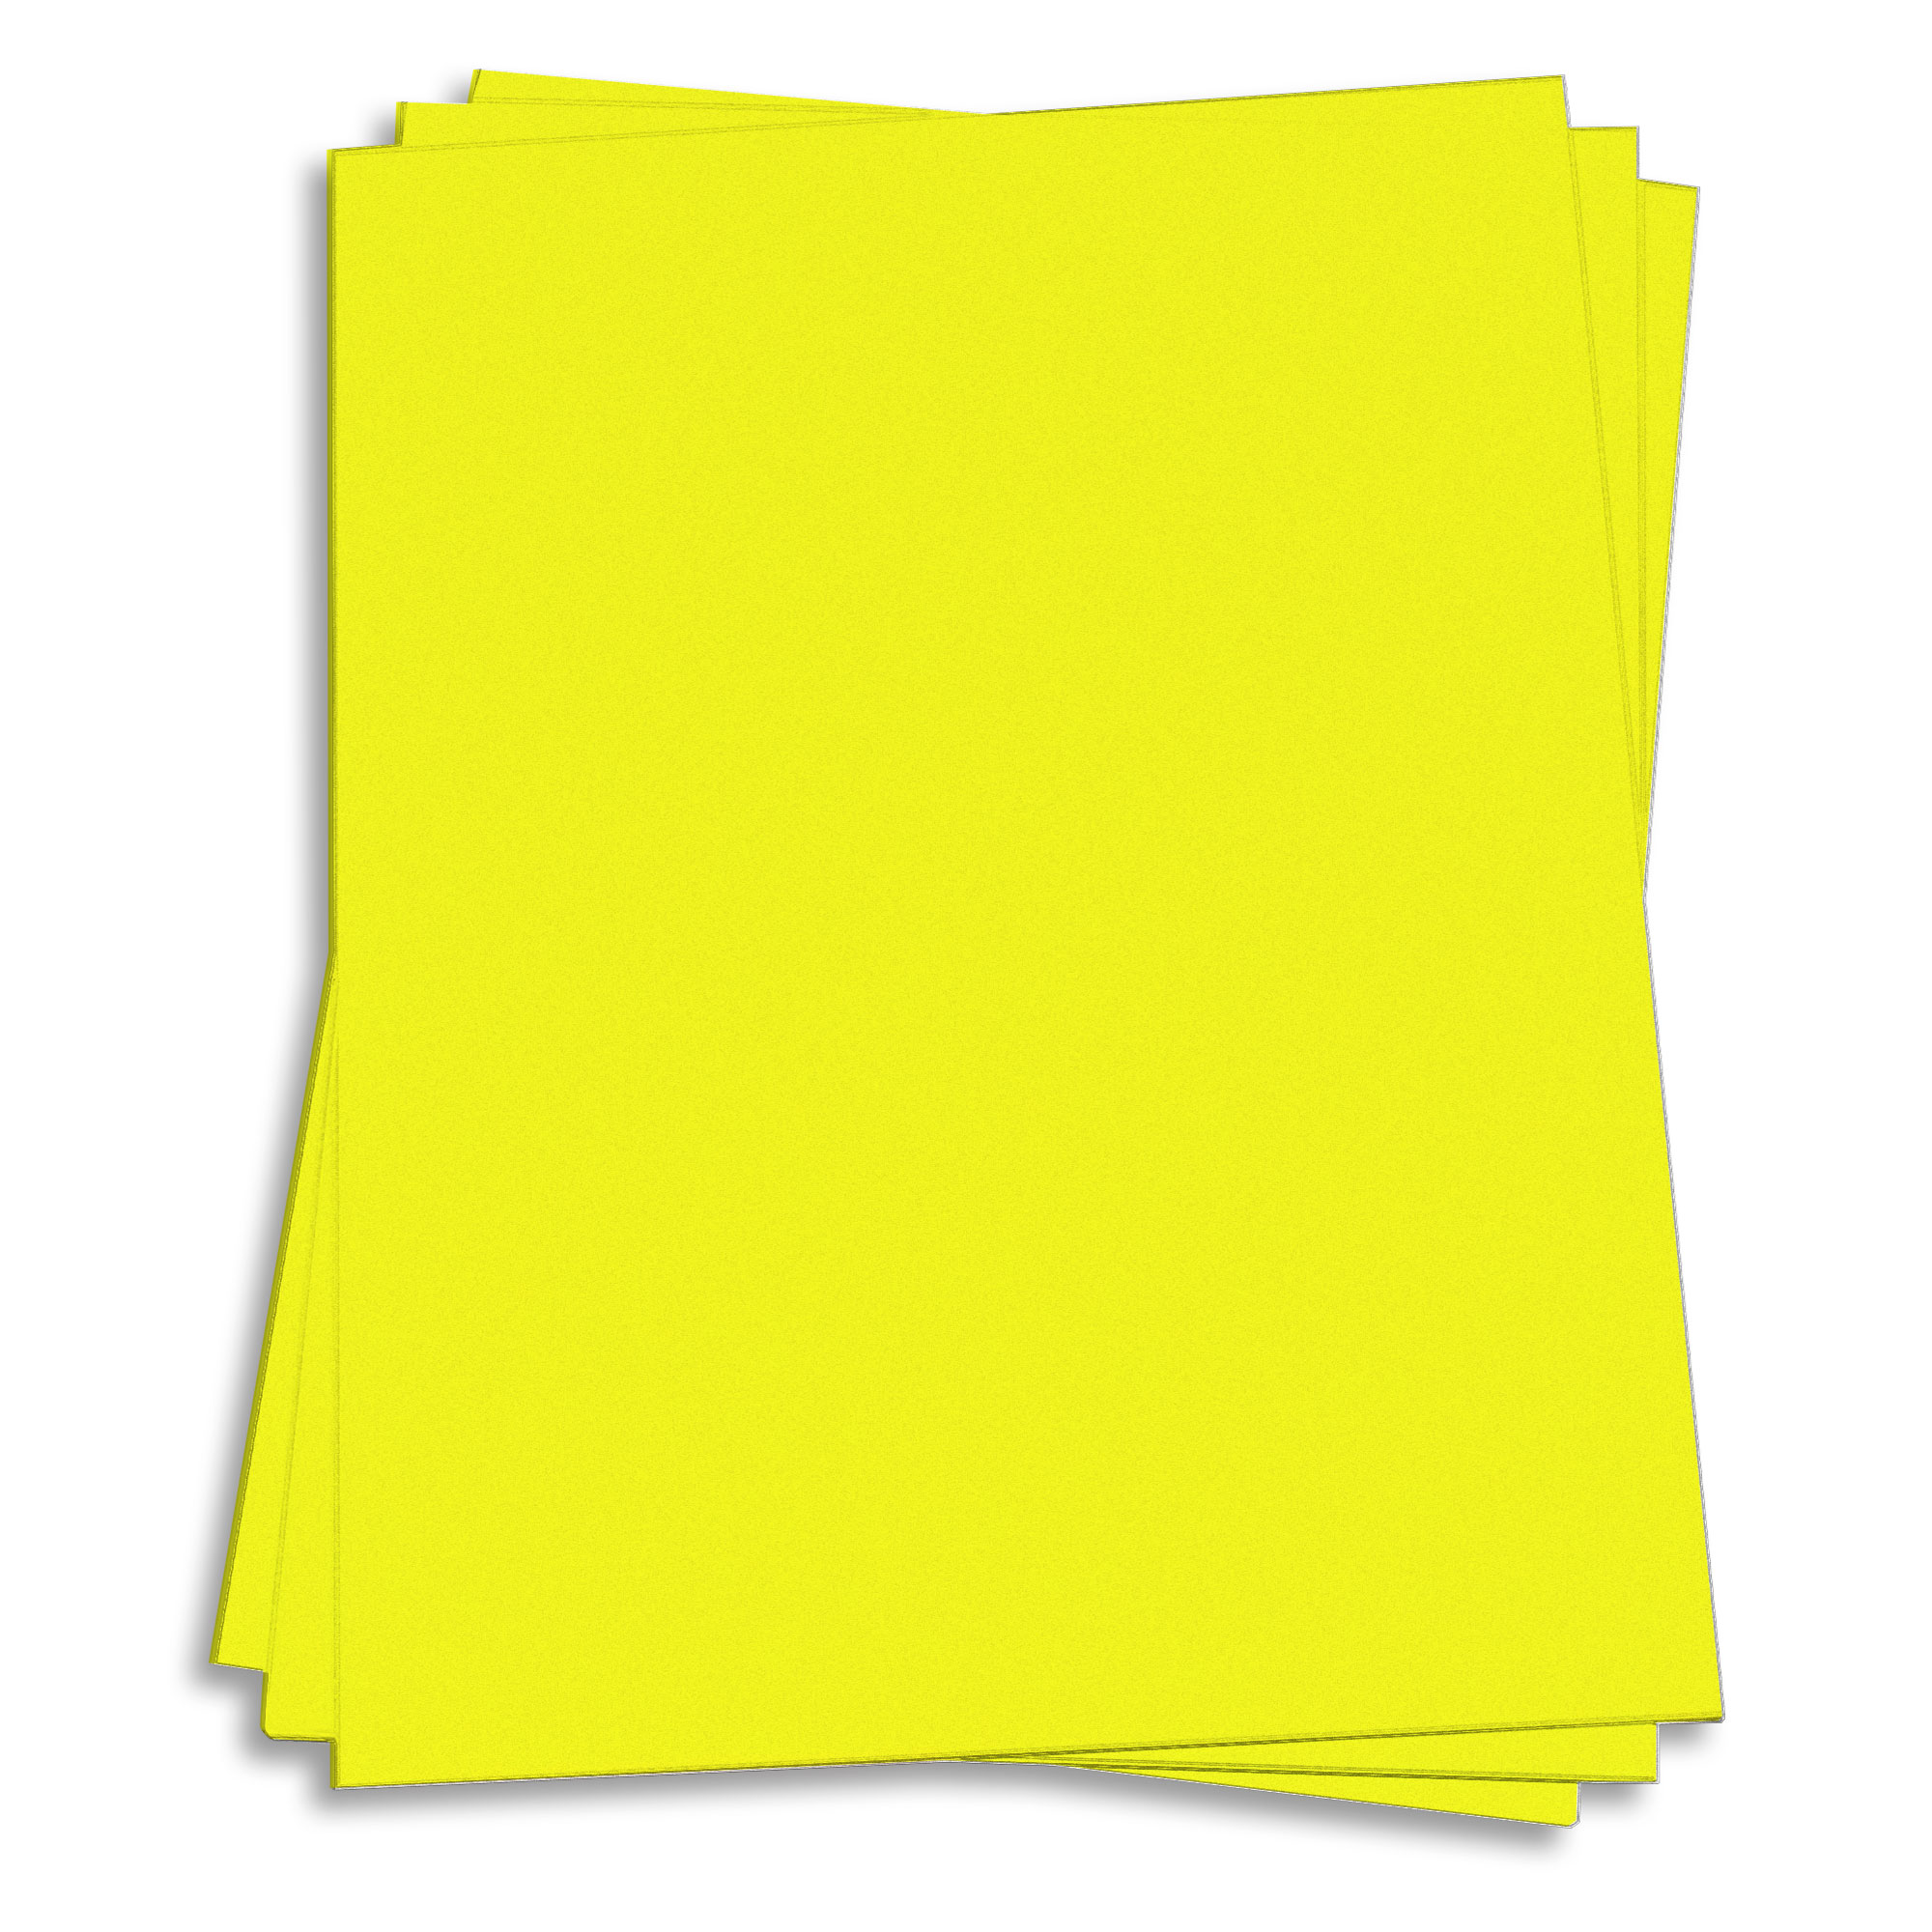 Lift-Off Lemon Yellow Paper - 8 1/2 x 11 60lb Text